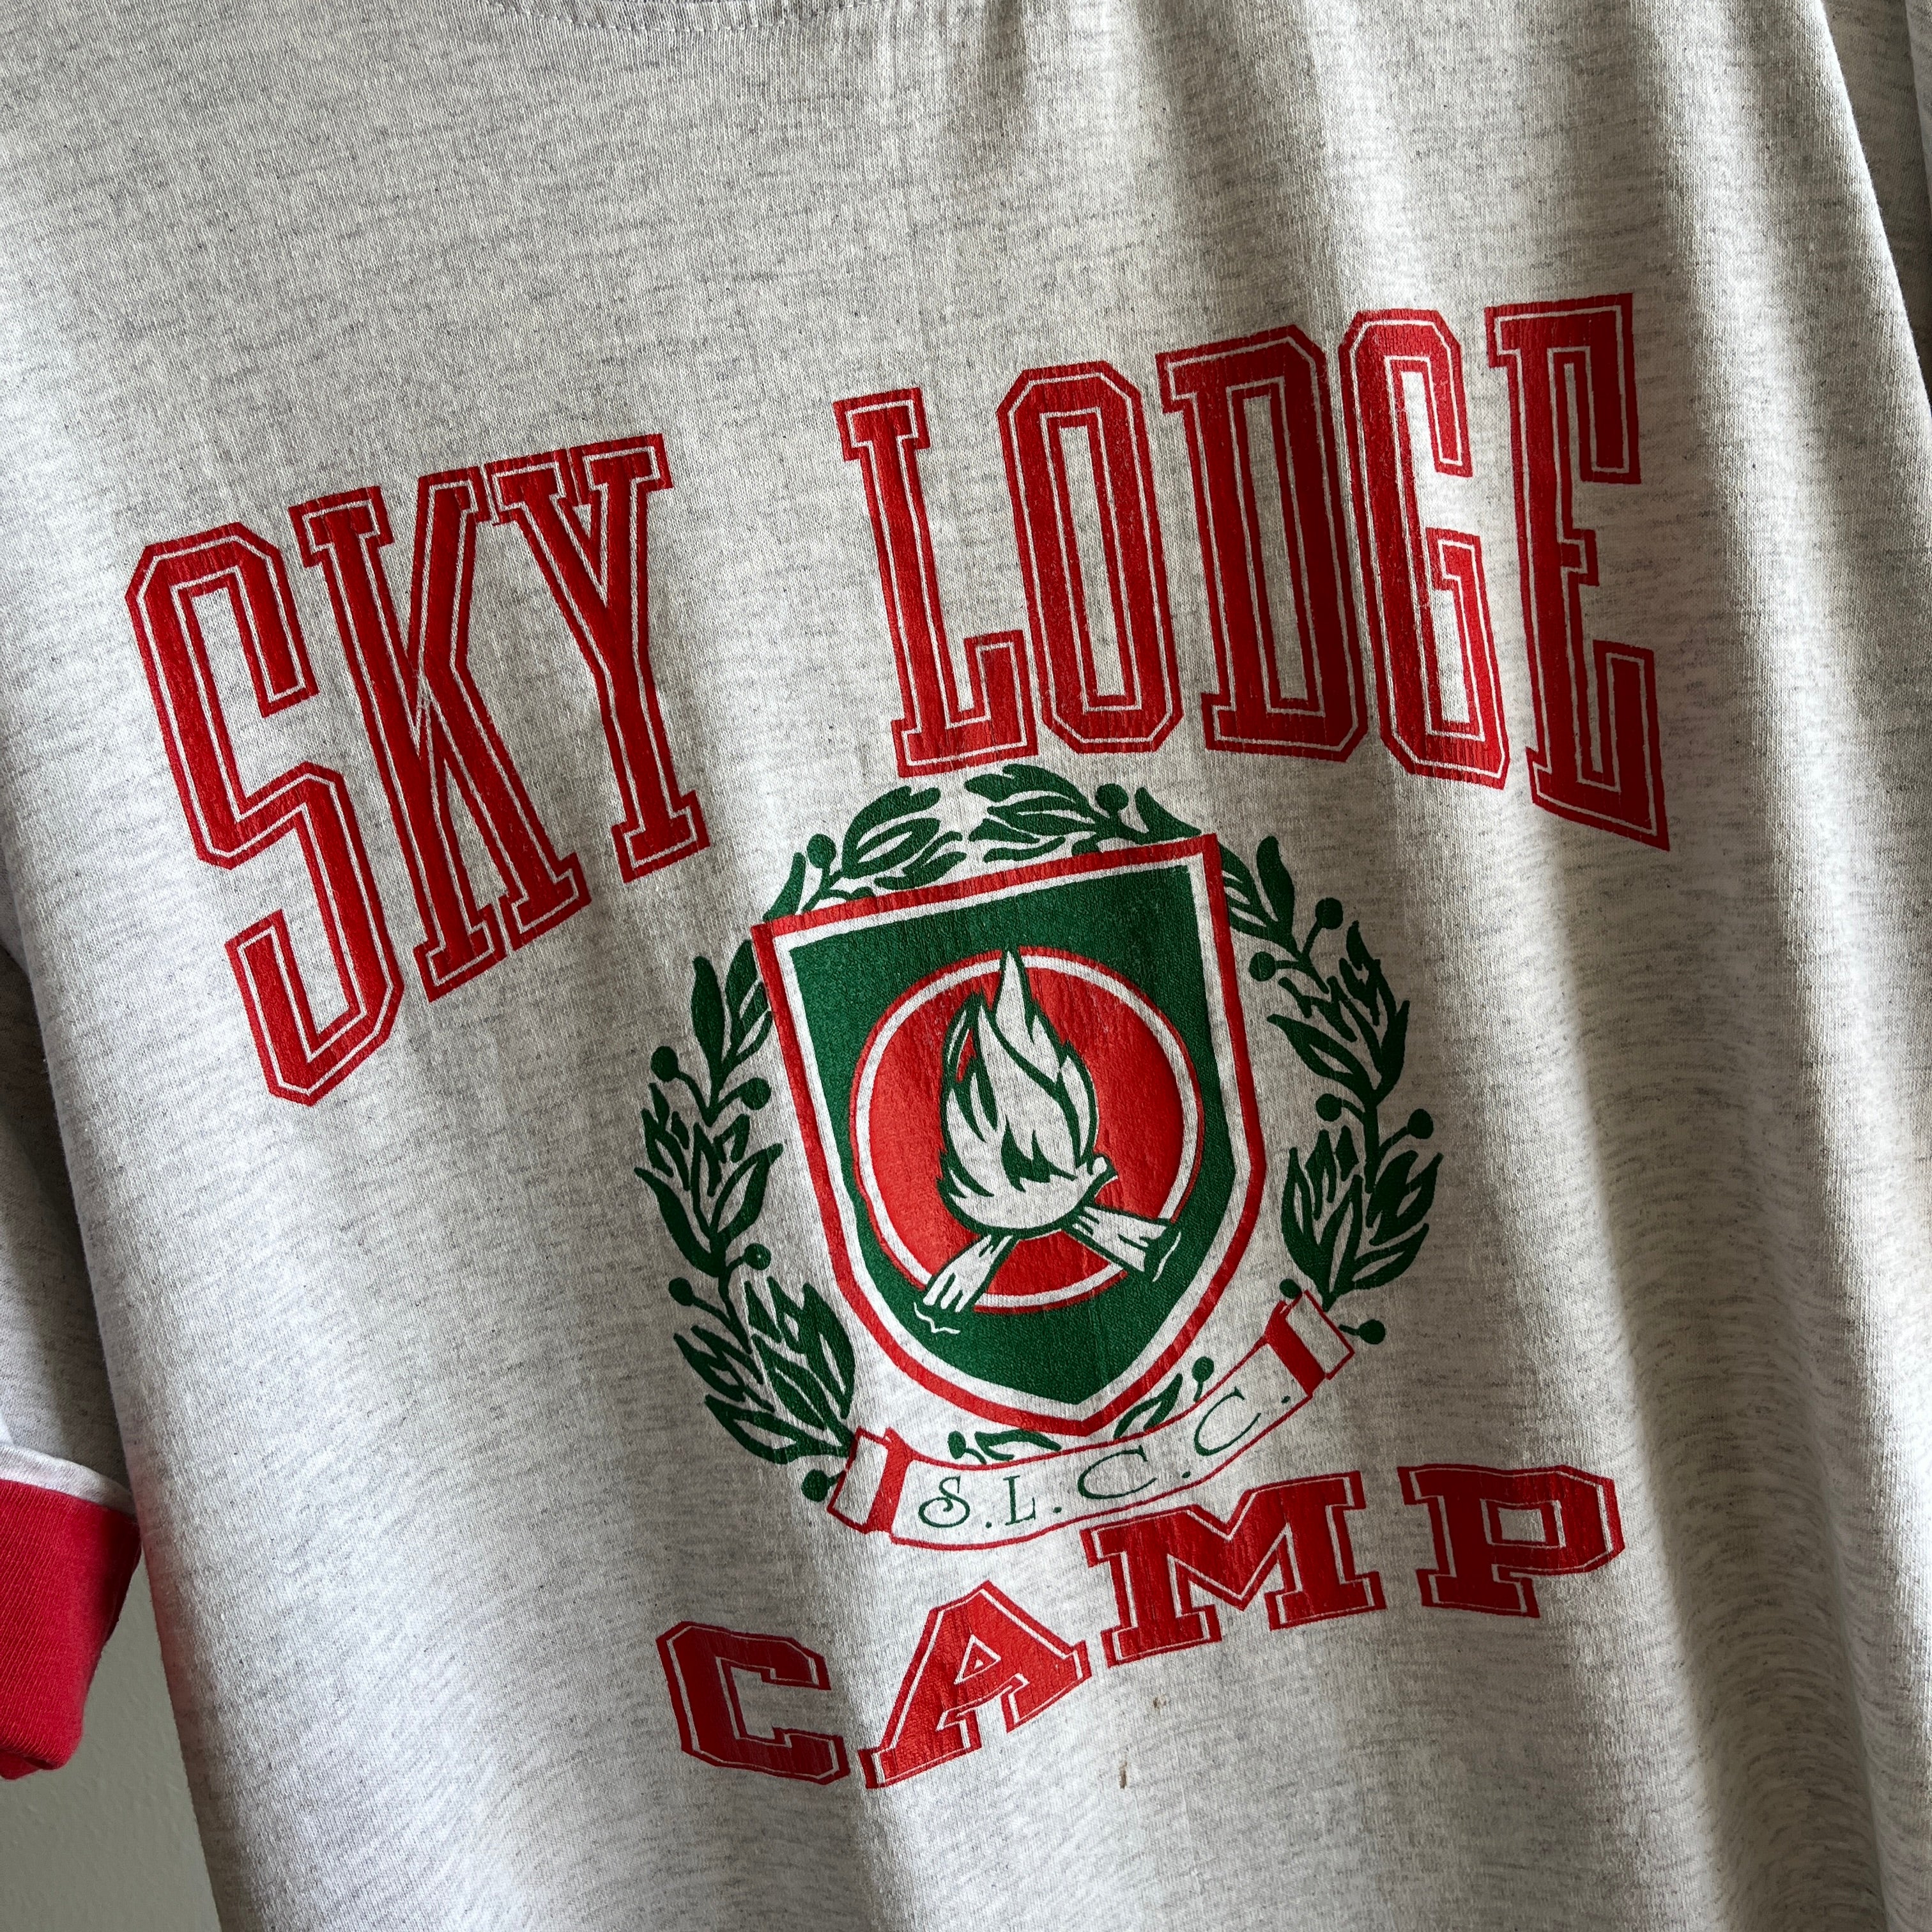 1990s Sky Lodge Camp Two Tone T-Shirt